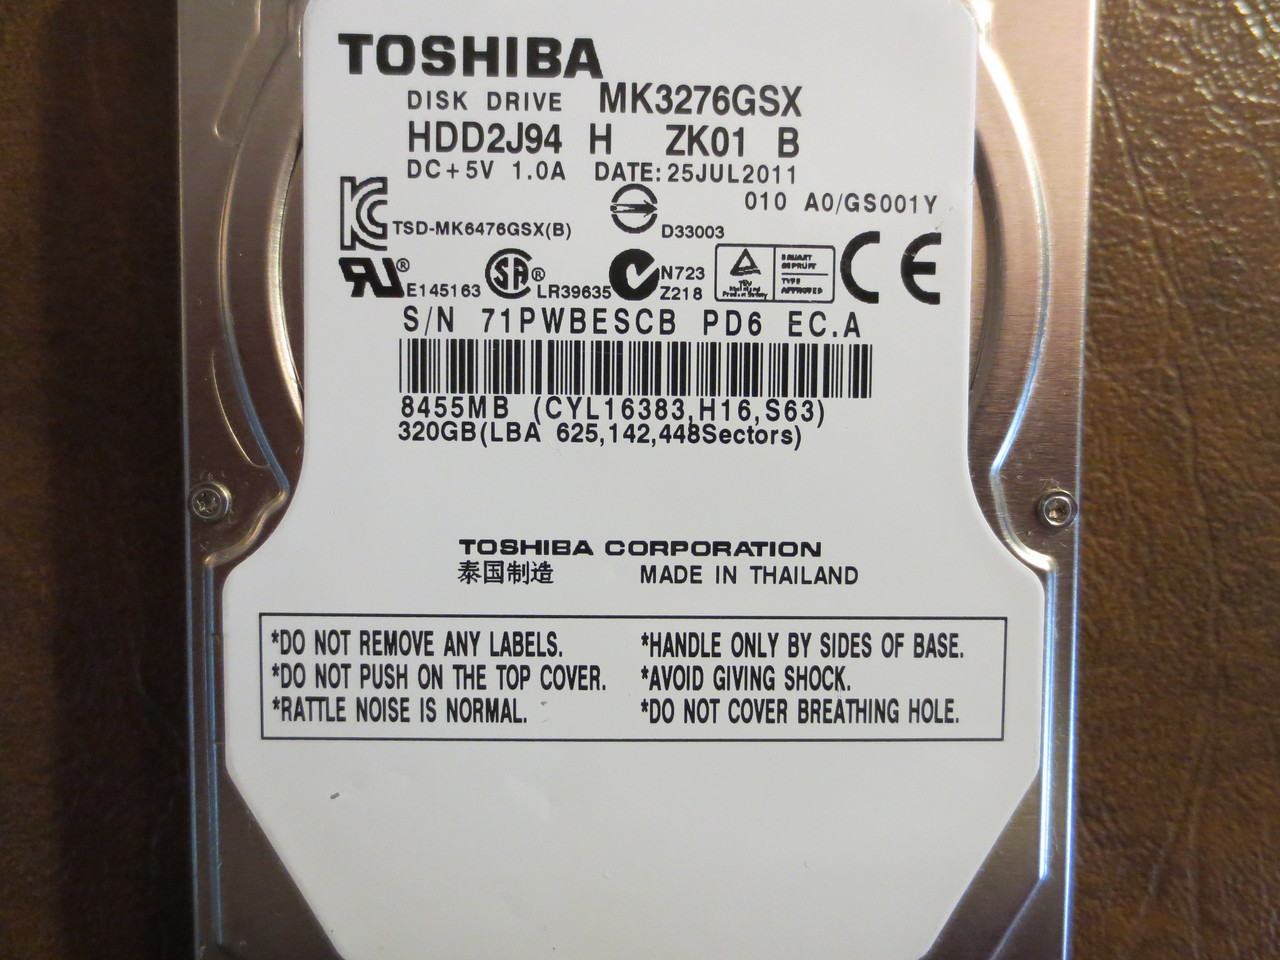 Toshiba MK3276GSX HDD2J94 H ZK01 B 010 A0/GS001Y 320gb Sata - Effective  Electronics